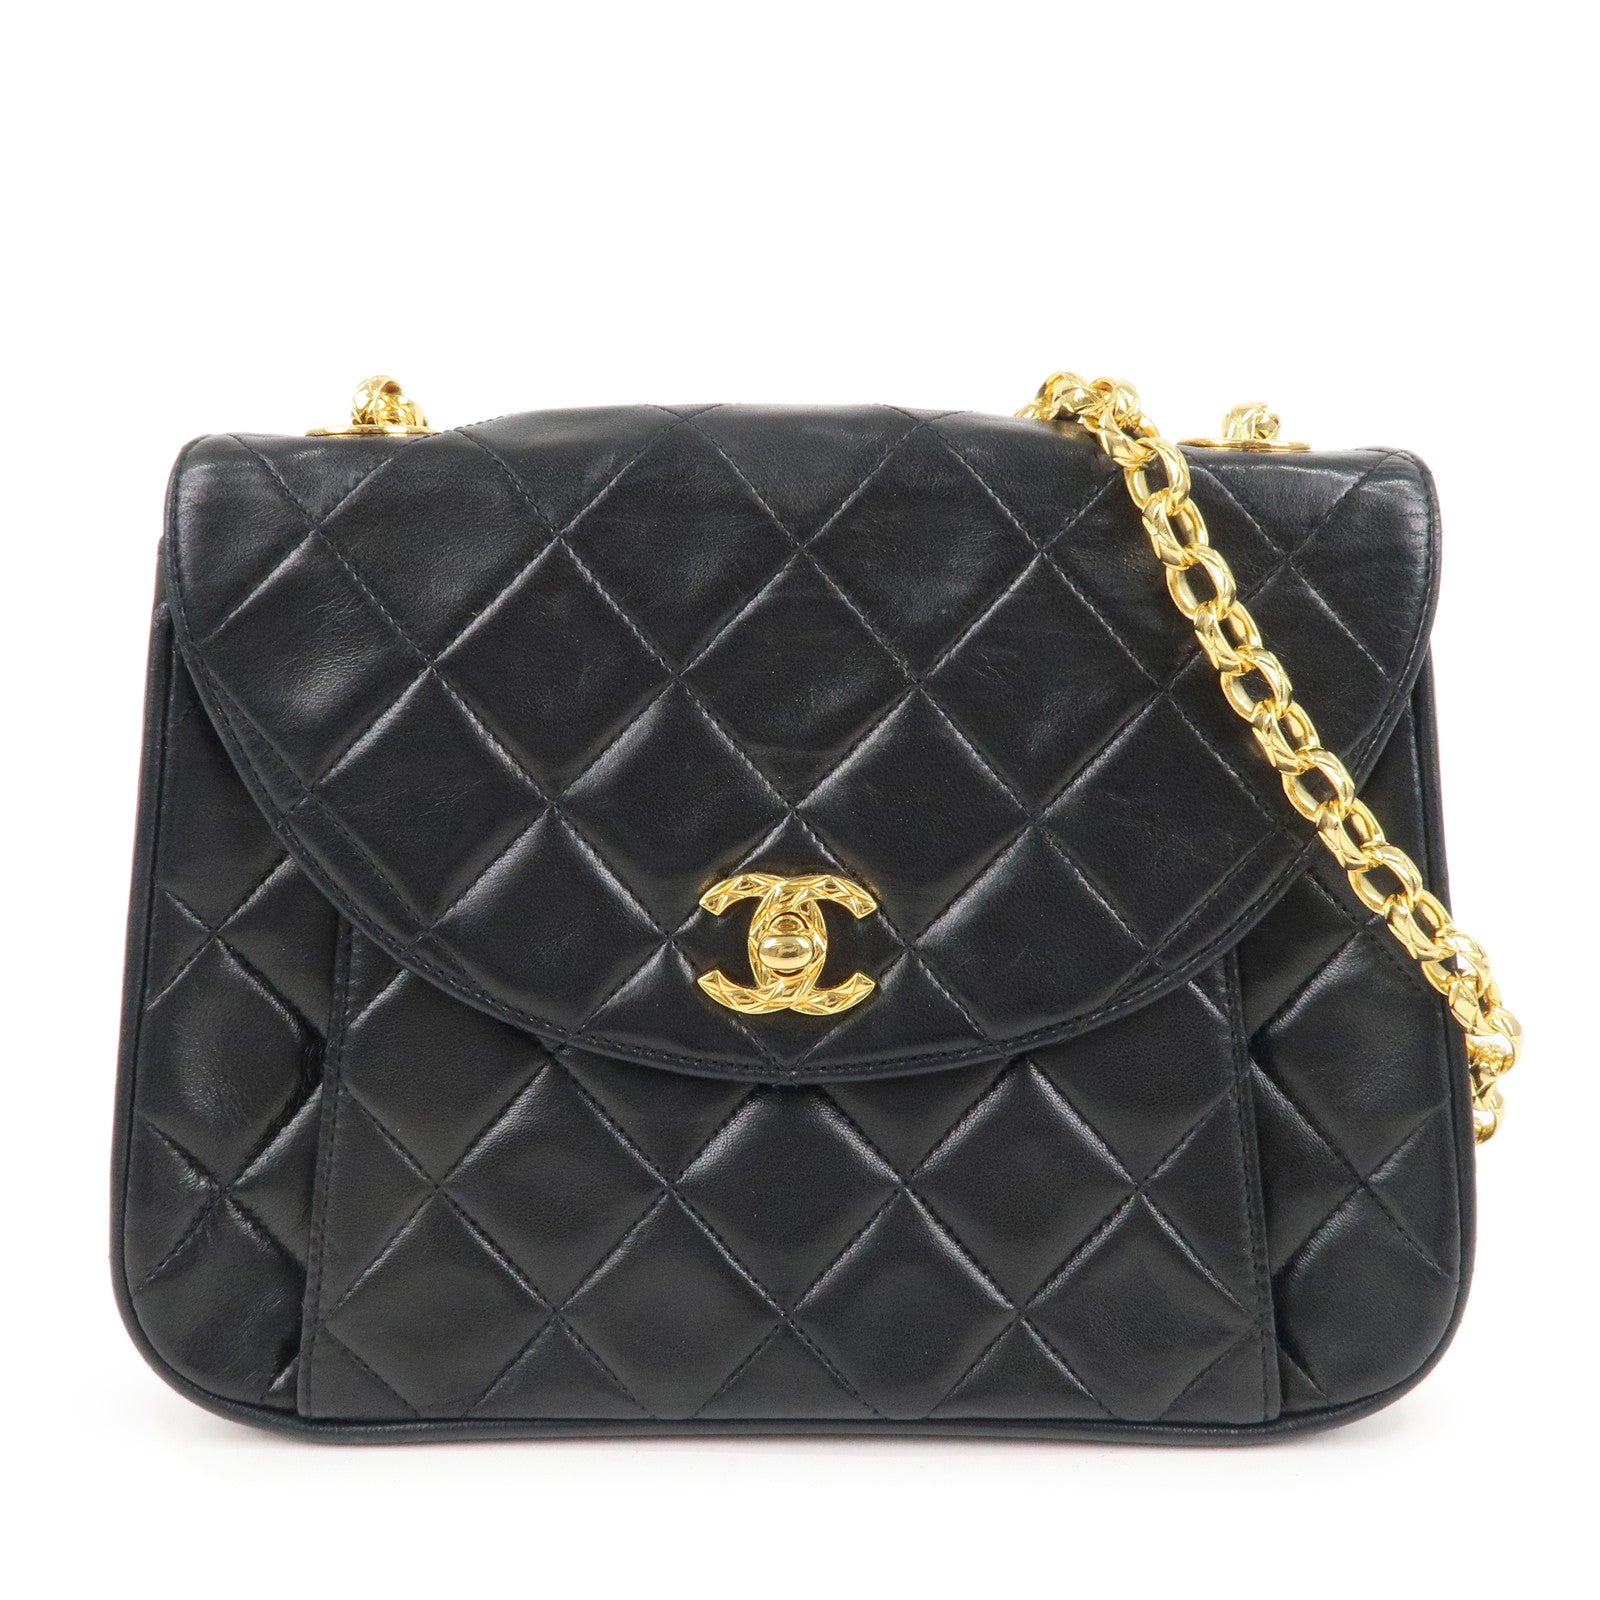 Chanel Chanel Travel Line Black Jacquard Nylon Medium Boston Bag